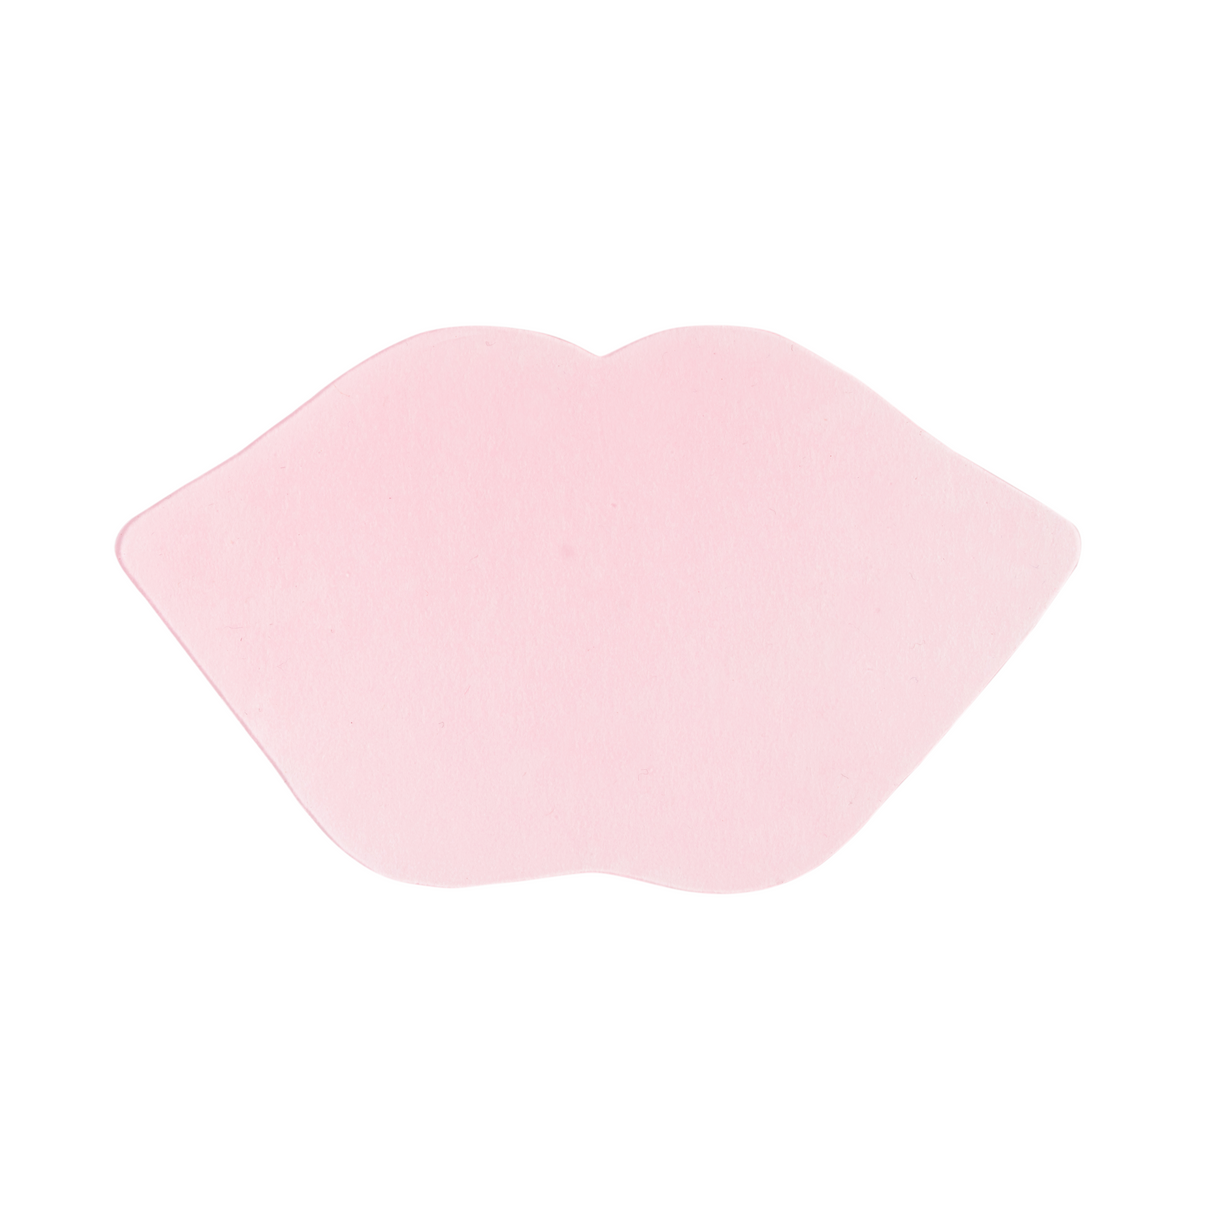 Hydrating Reusable Lip Mask | Dreambox Beauty